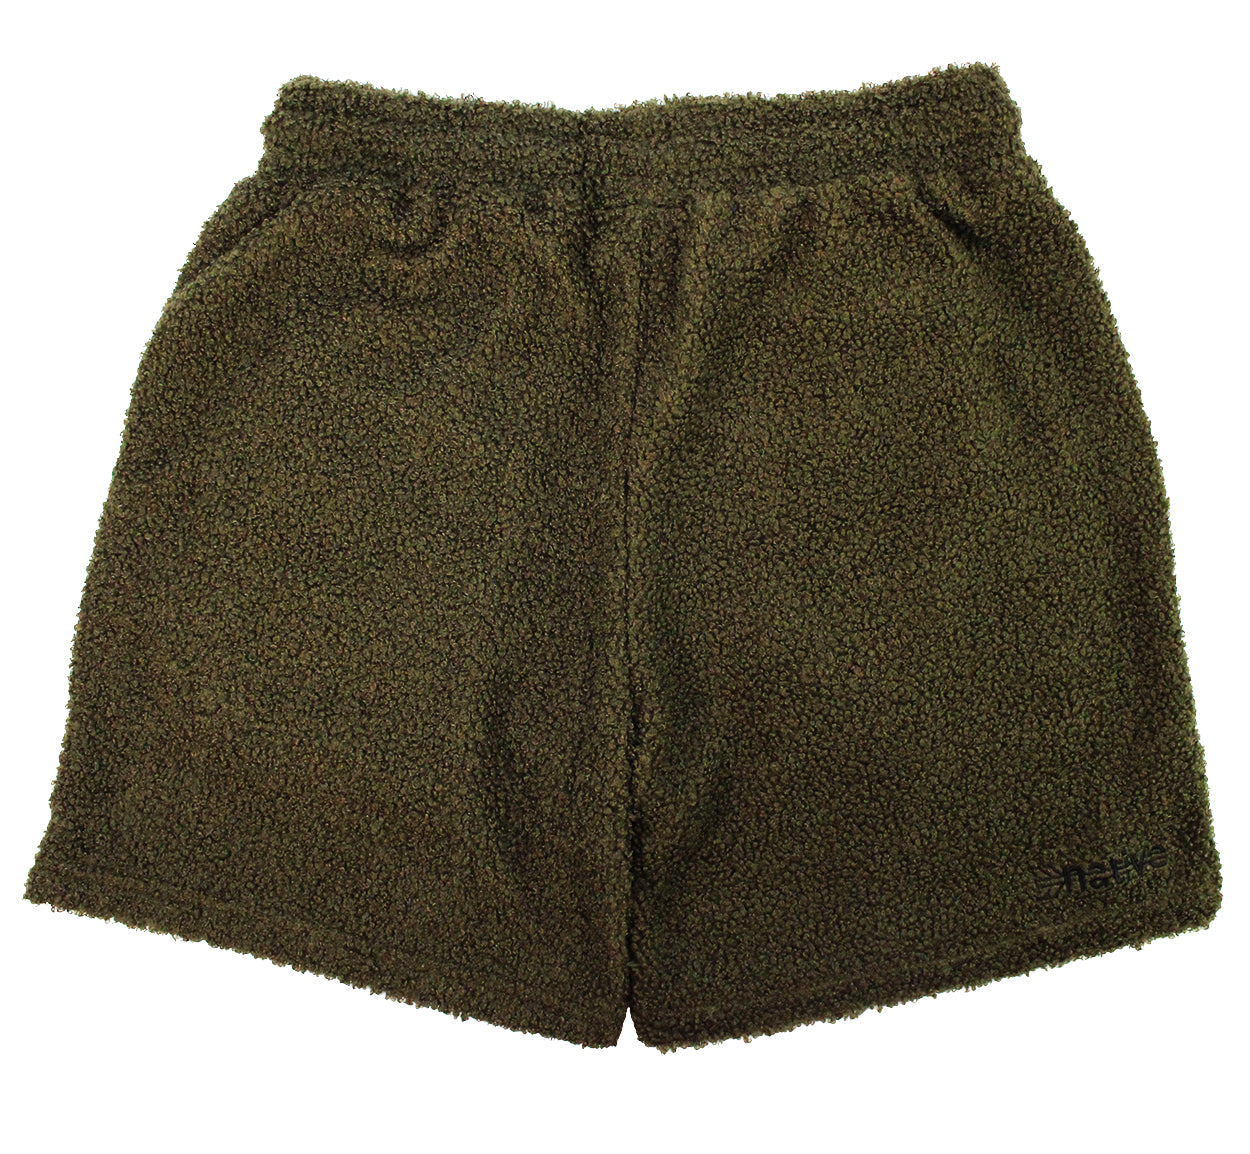 sherpa shorts in army green